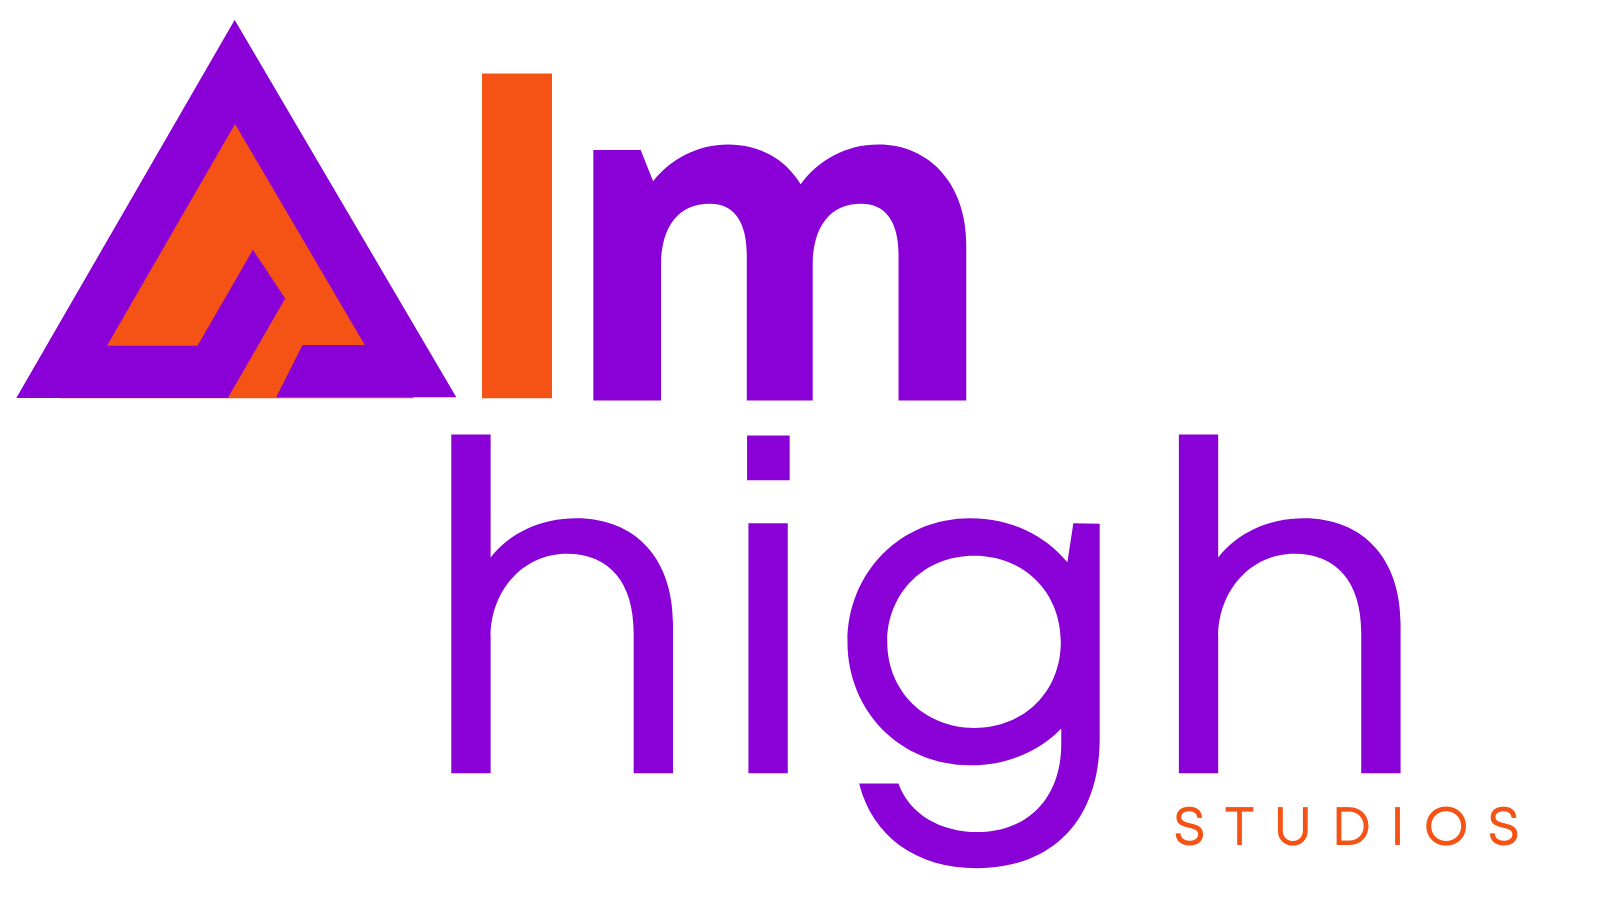 Aim High Studios